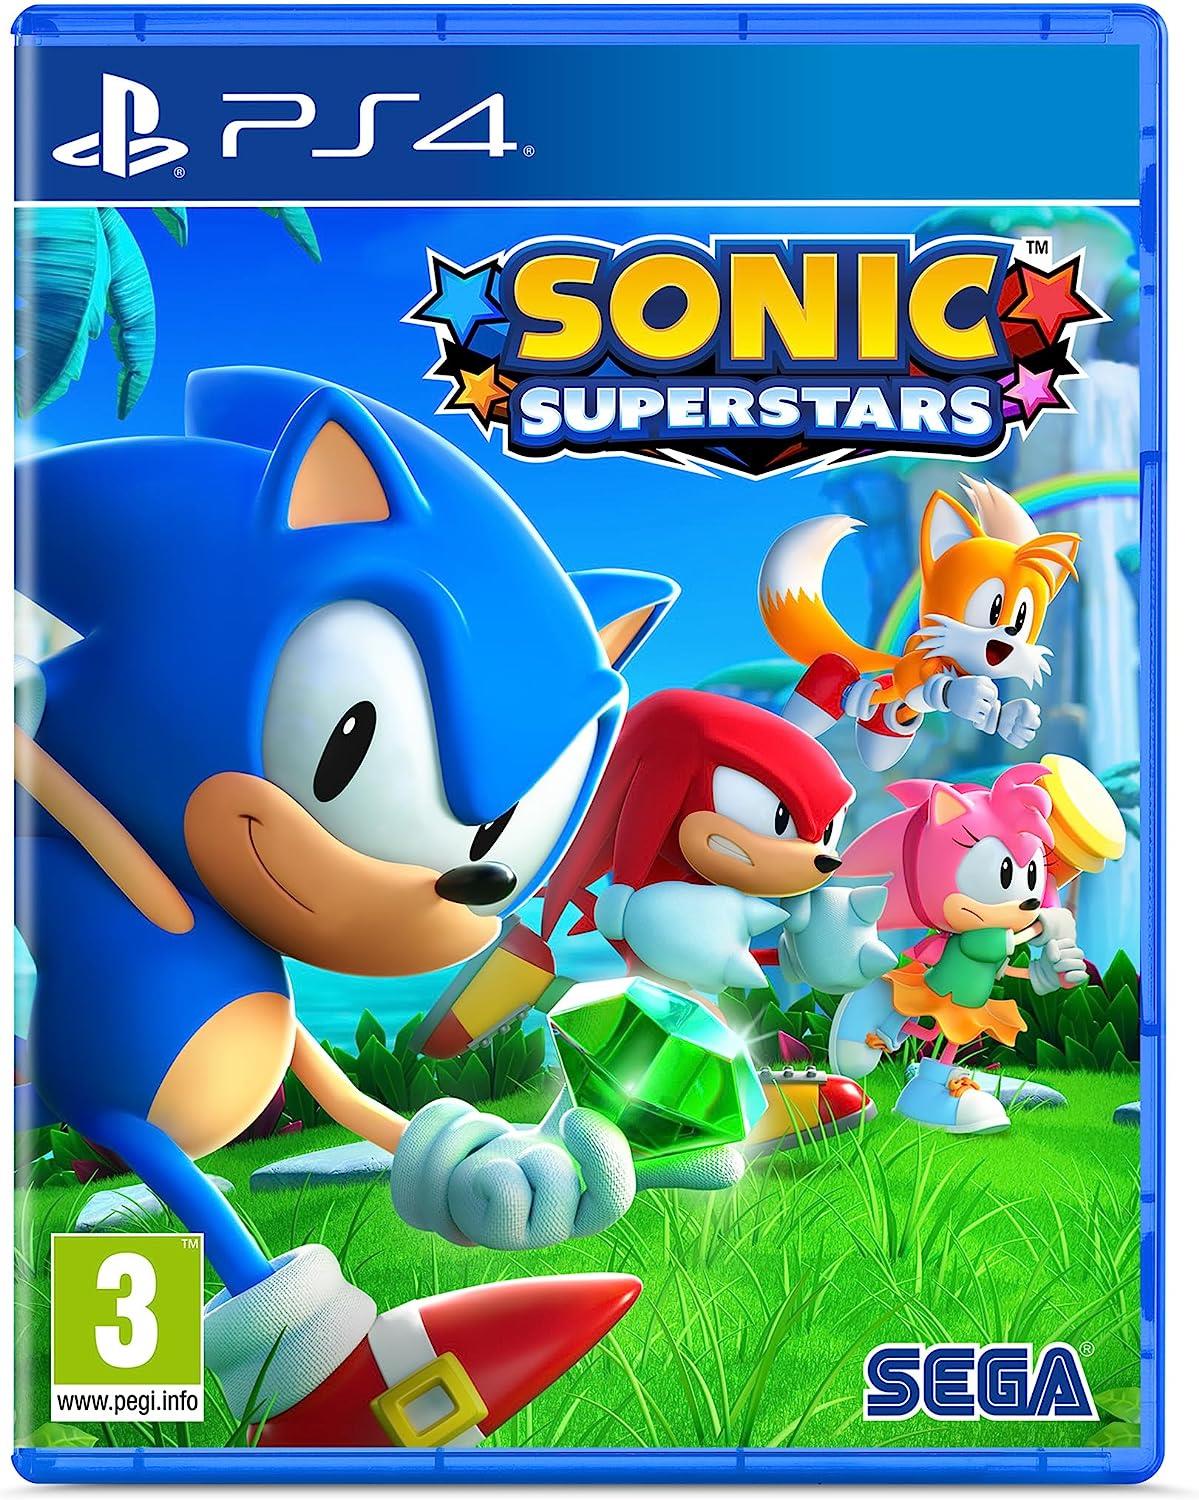 Sonic Superstars PS4